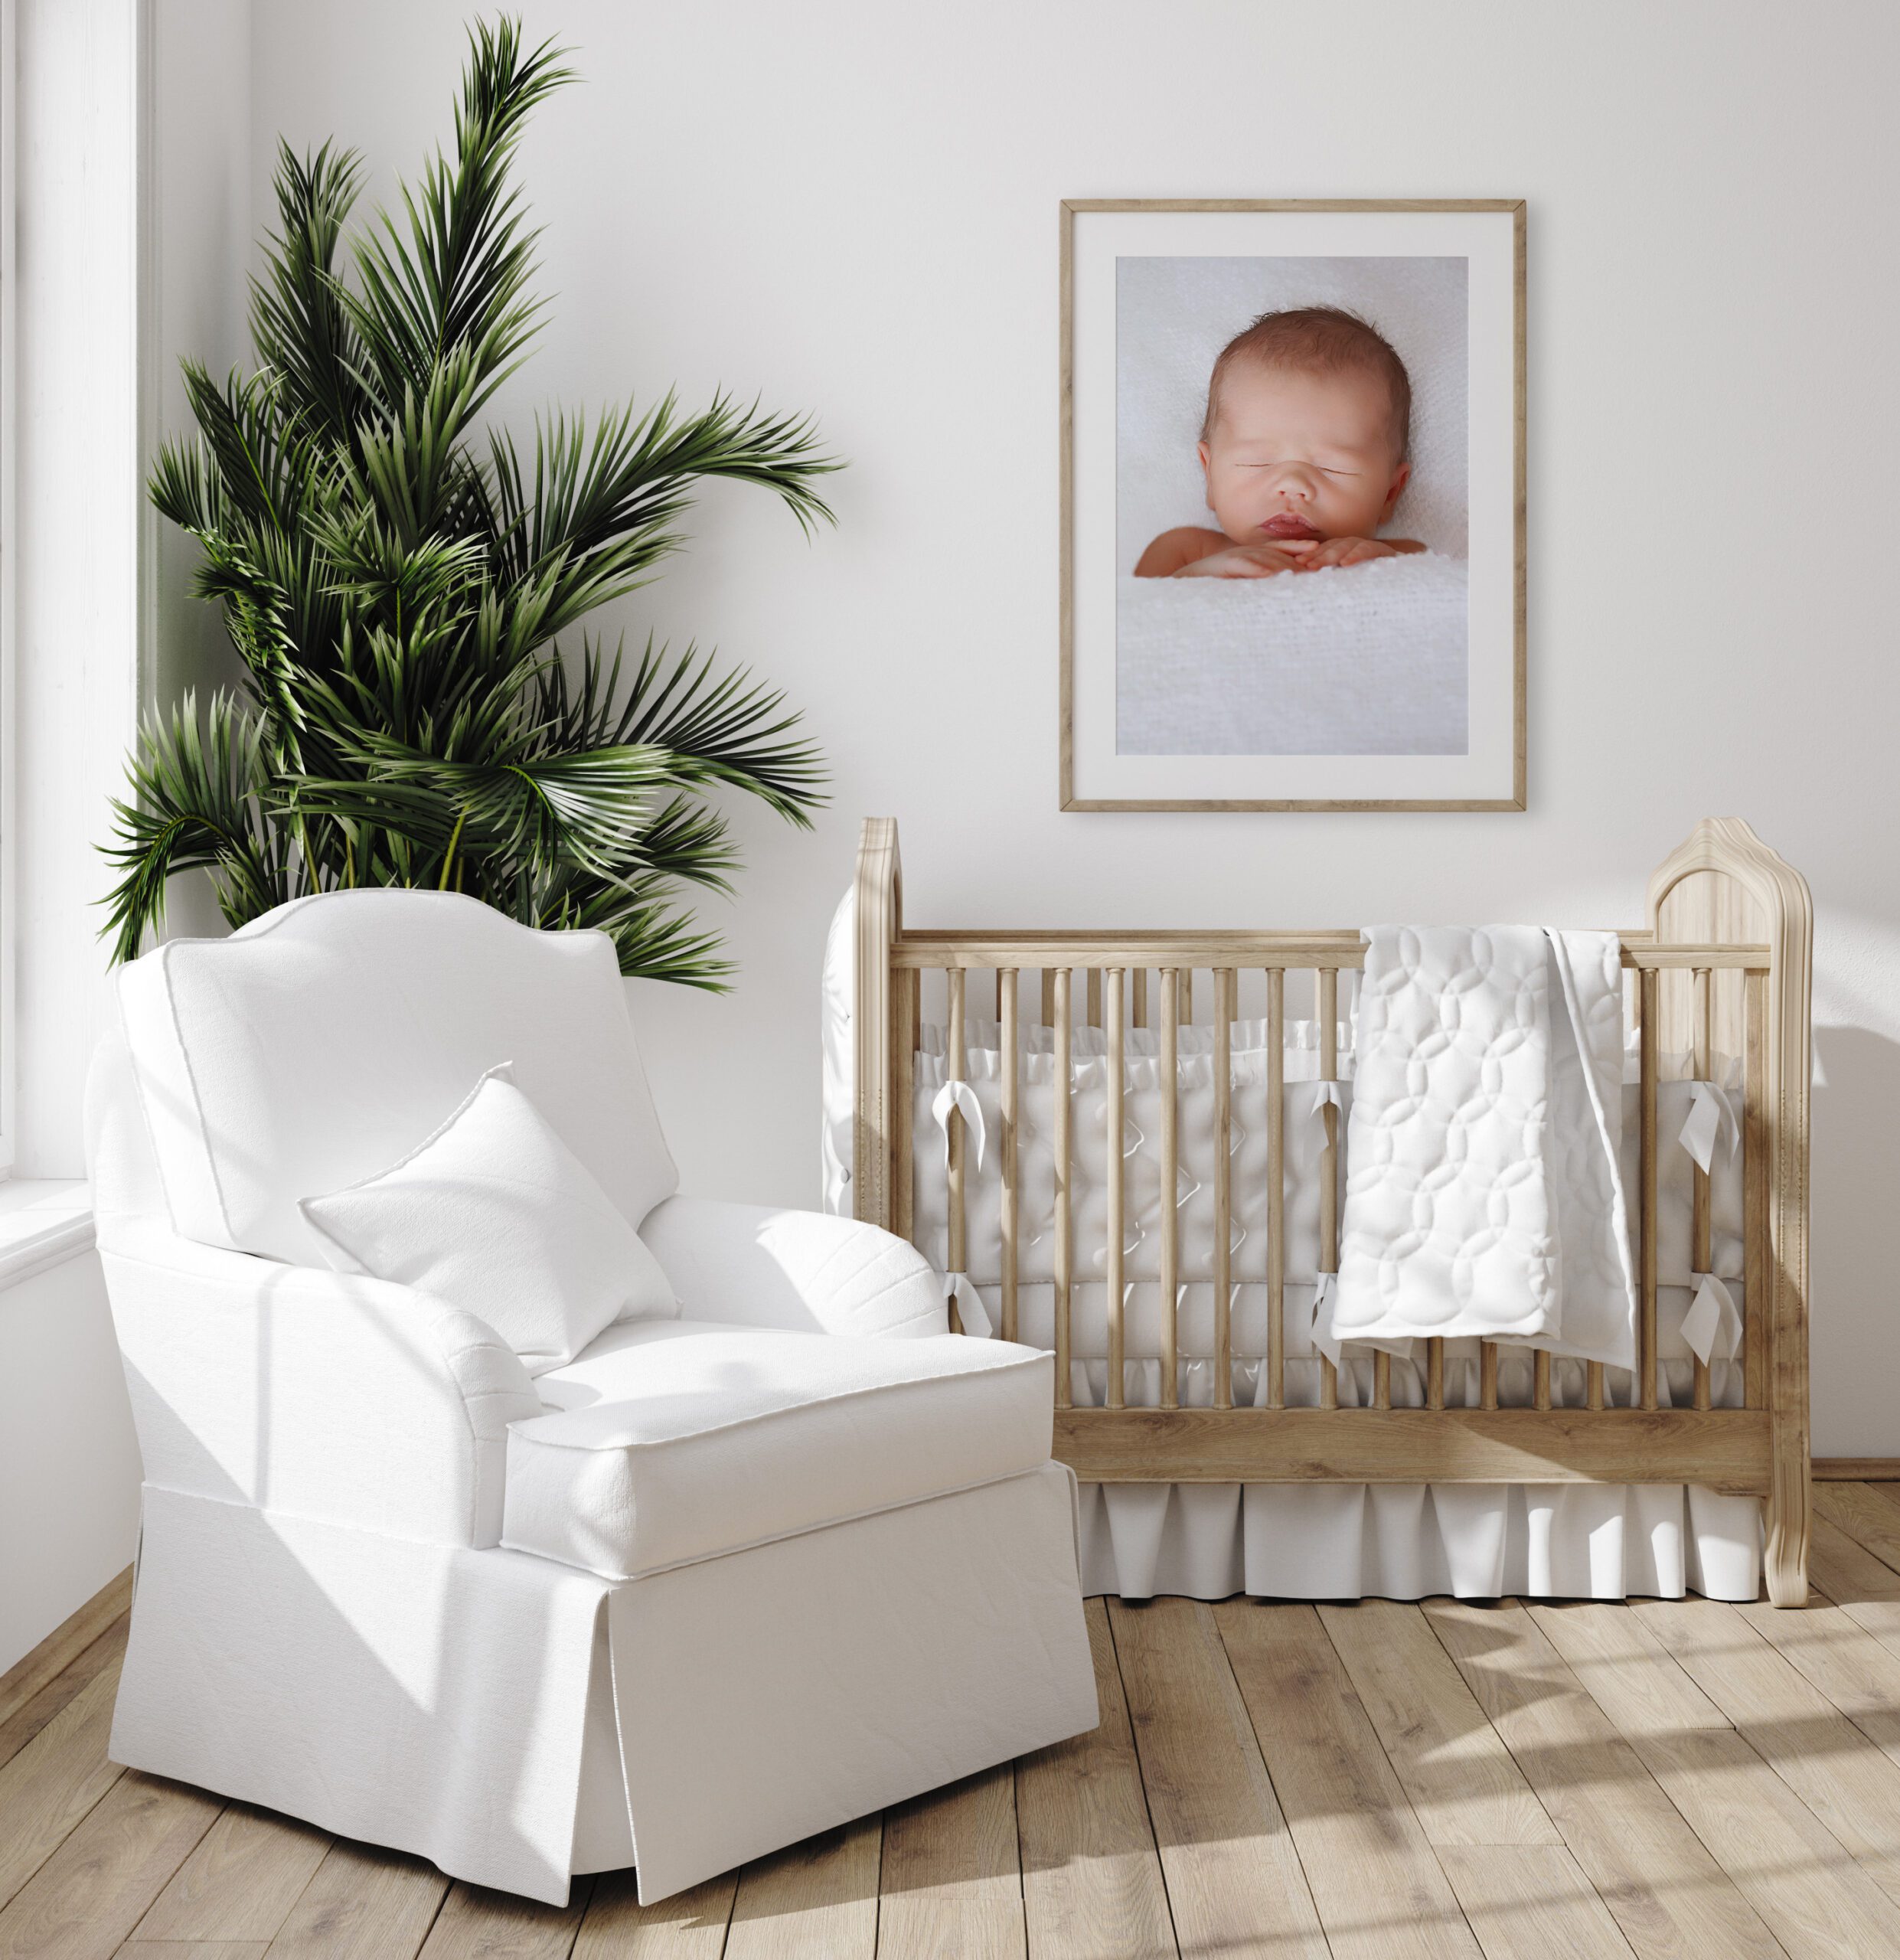 Framed newborn photography in nursery